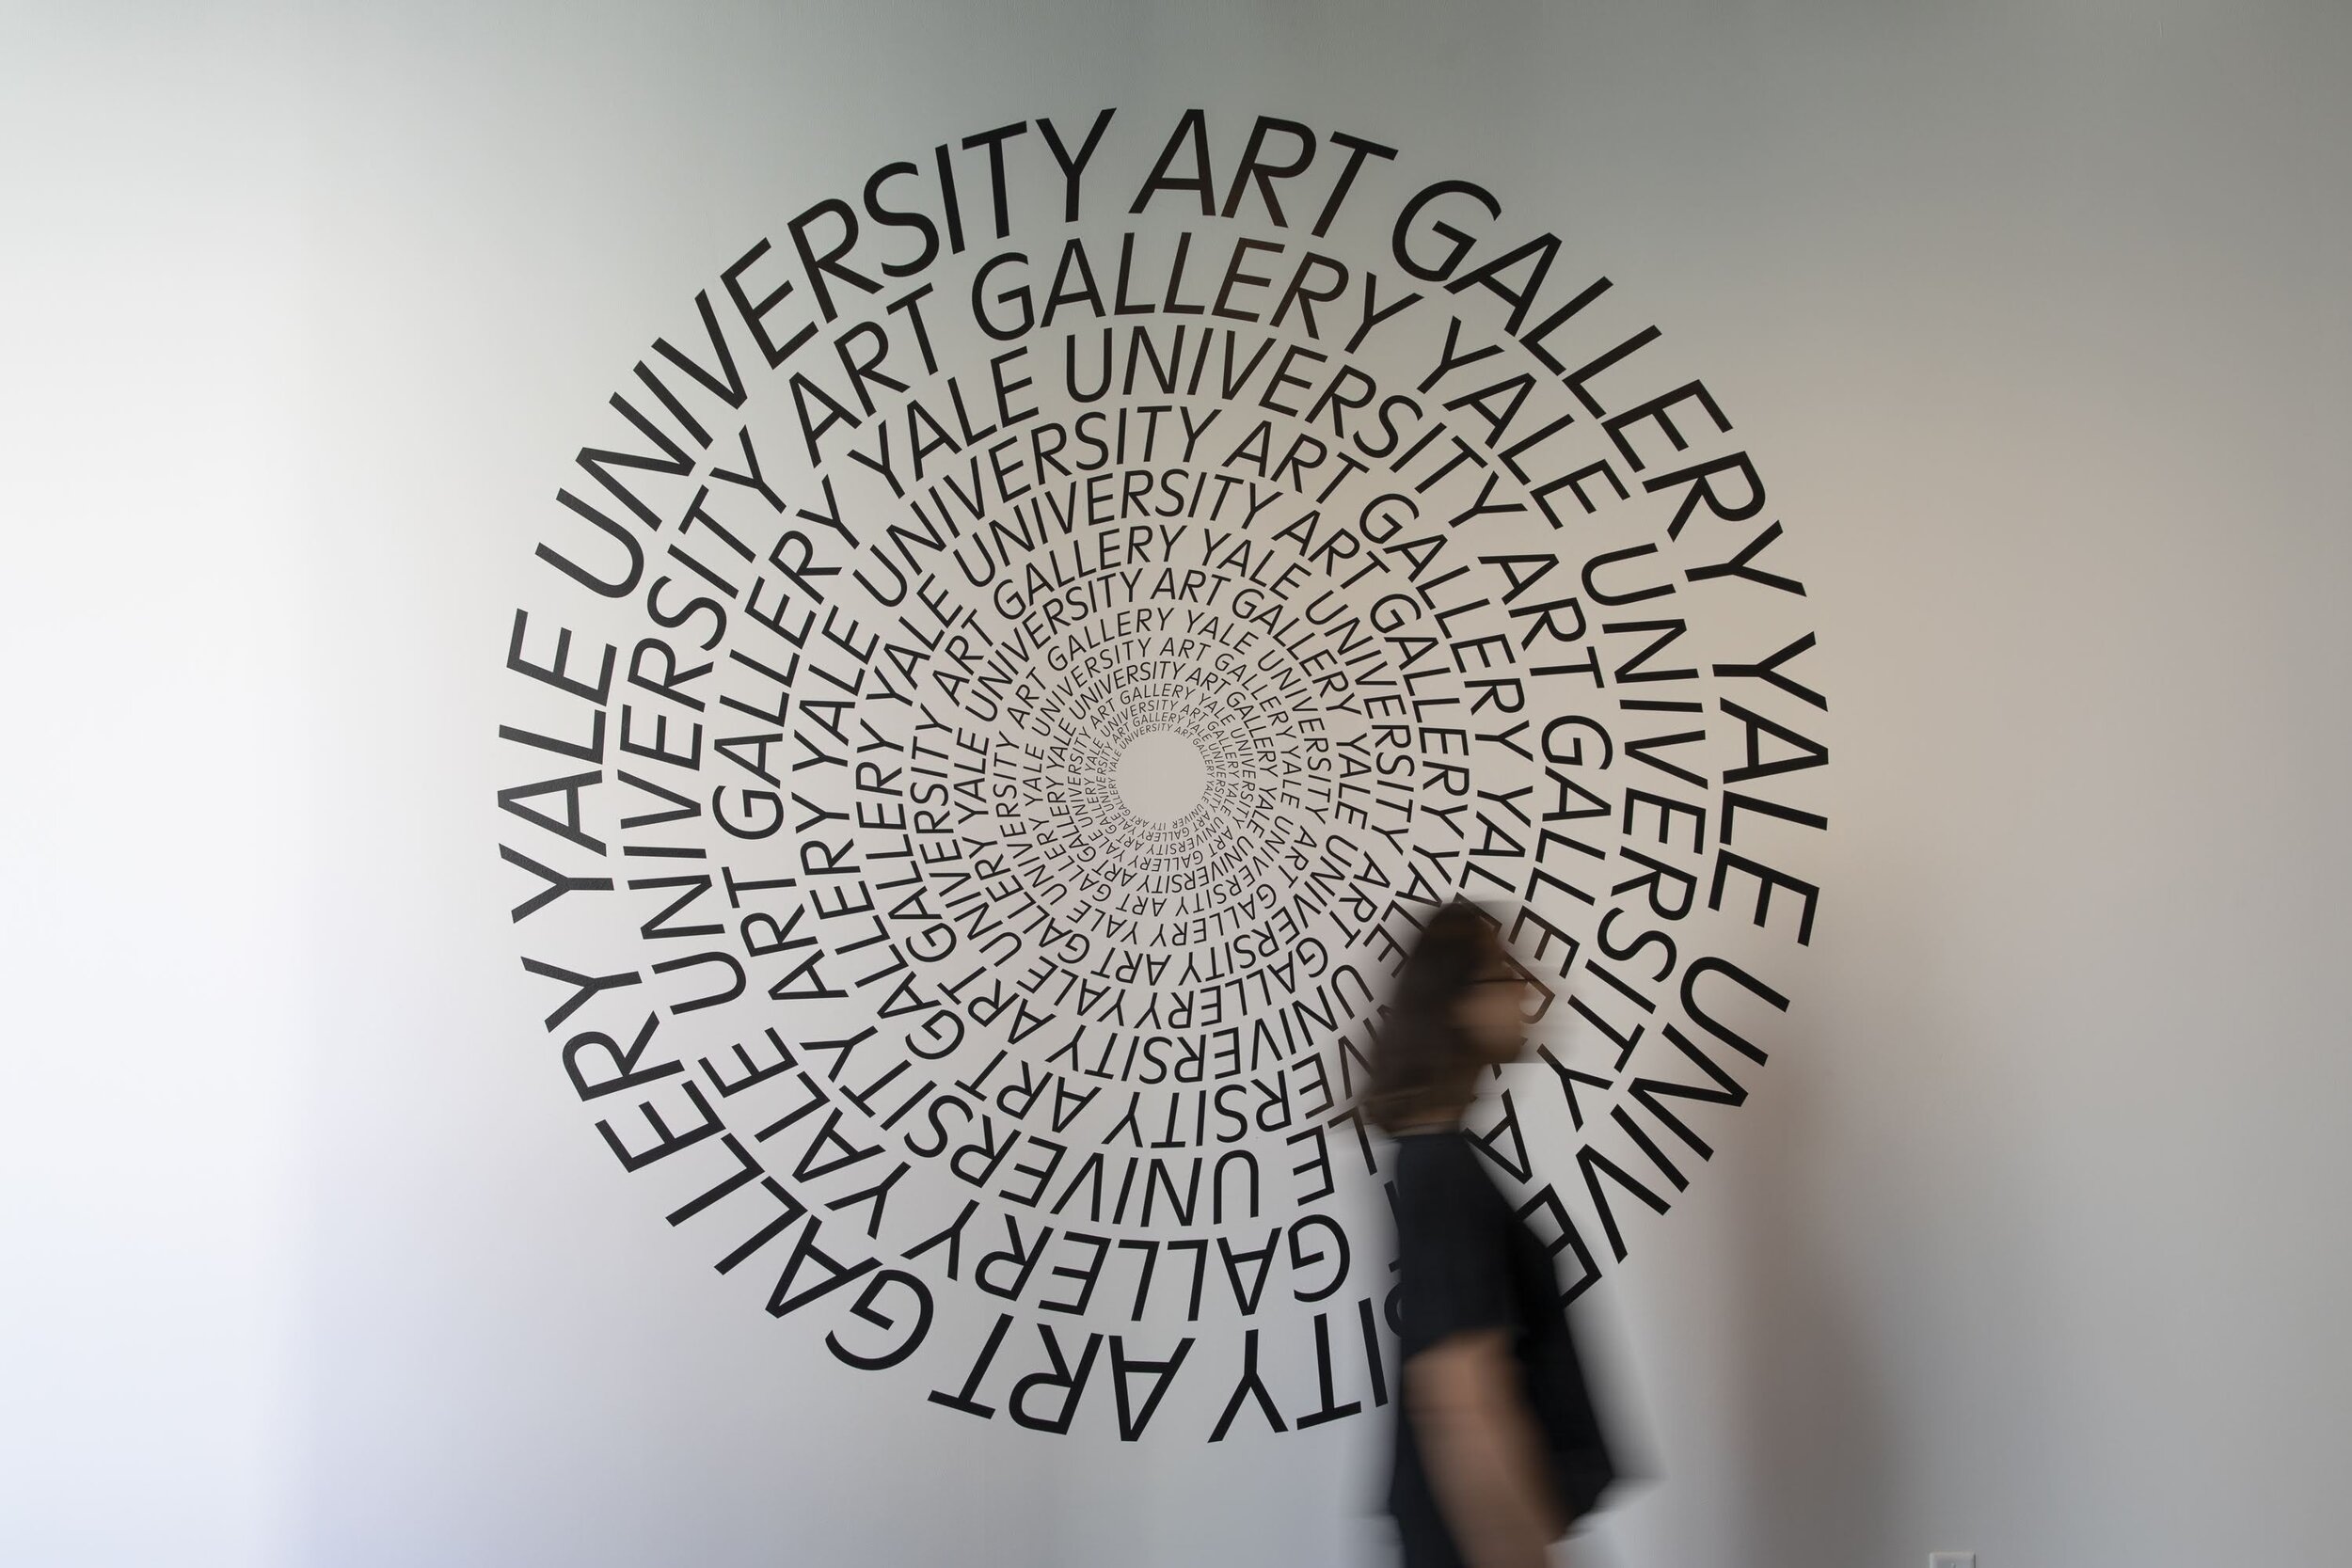 Yale University Art Gallery, New Haven, CT